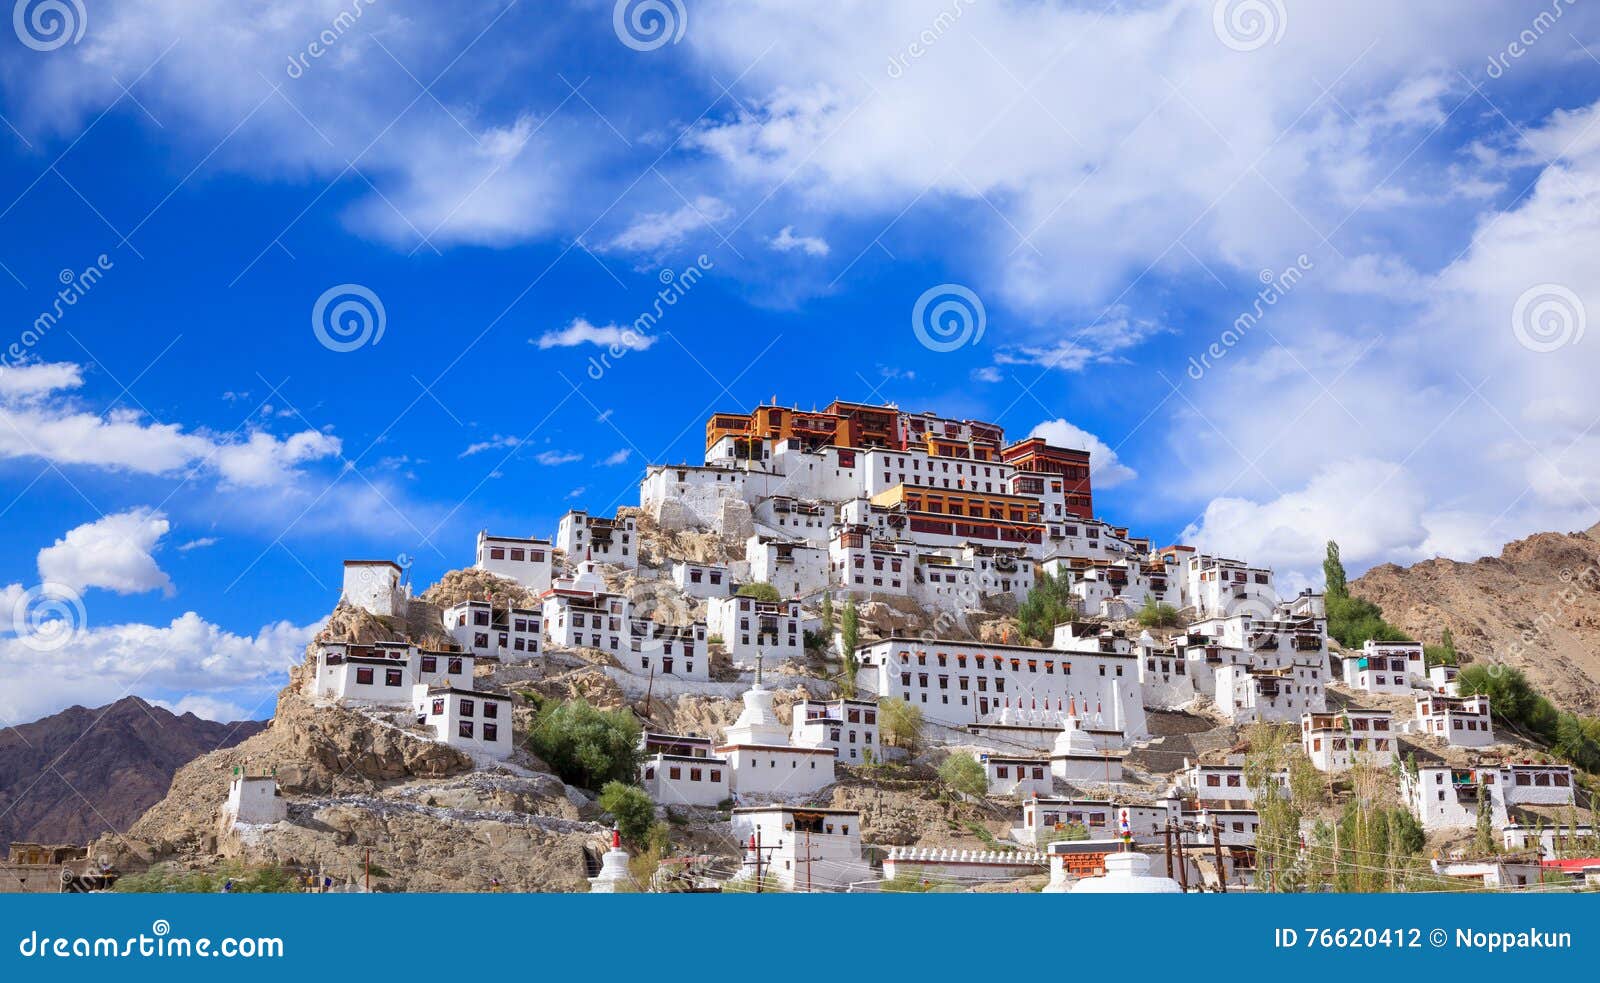 thiksey monastery, leh ladakh, jammu and kashmir, india